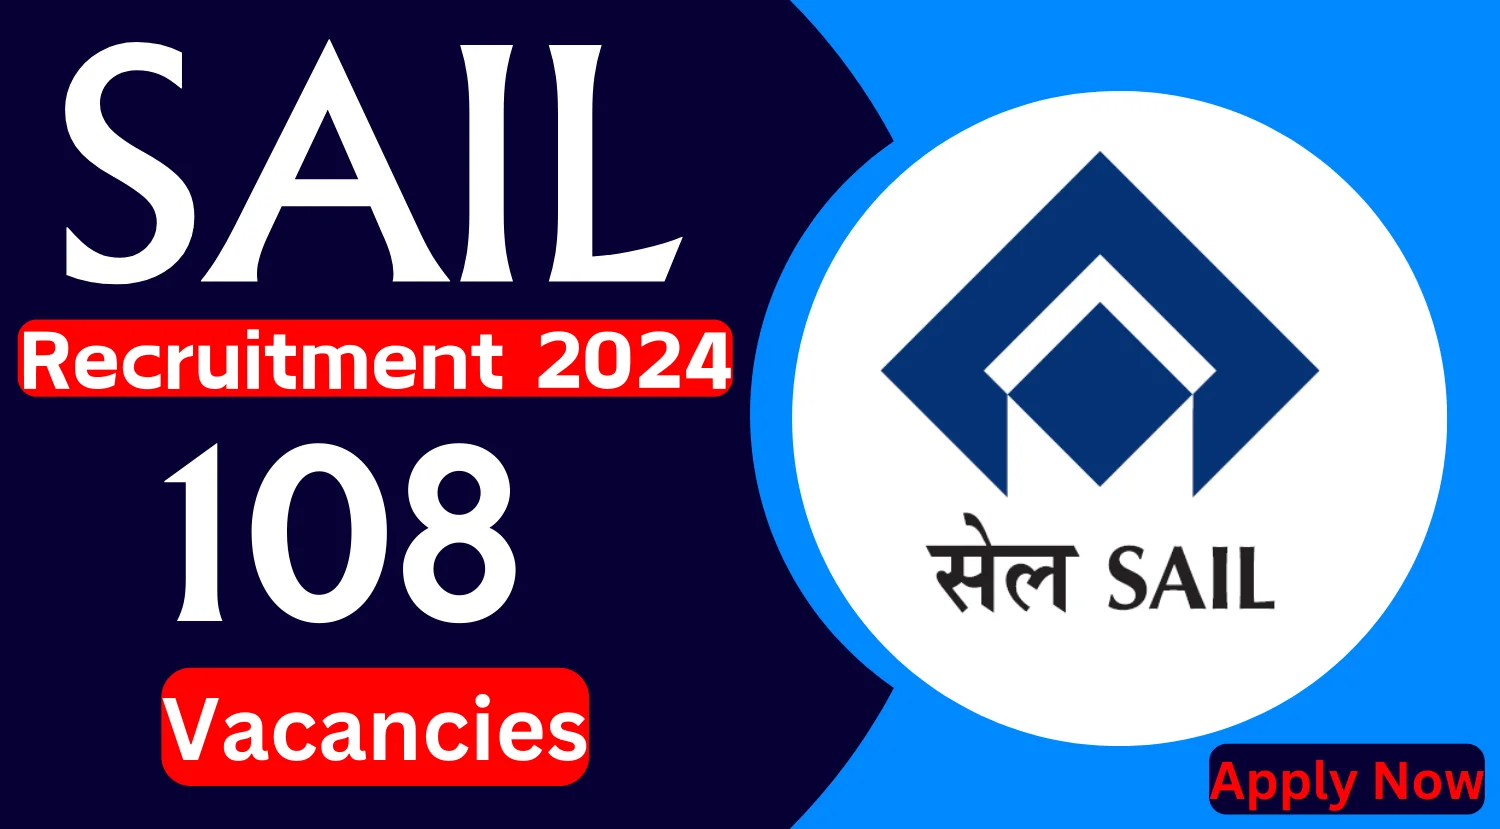 SAIL Recruitment 2024